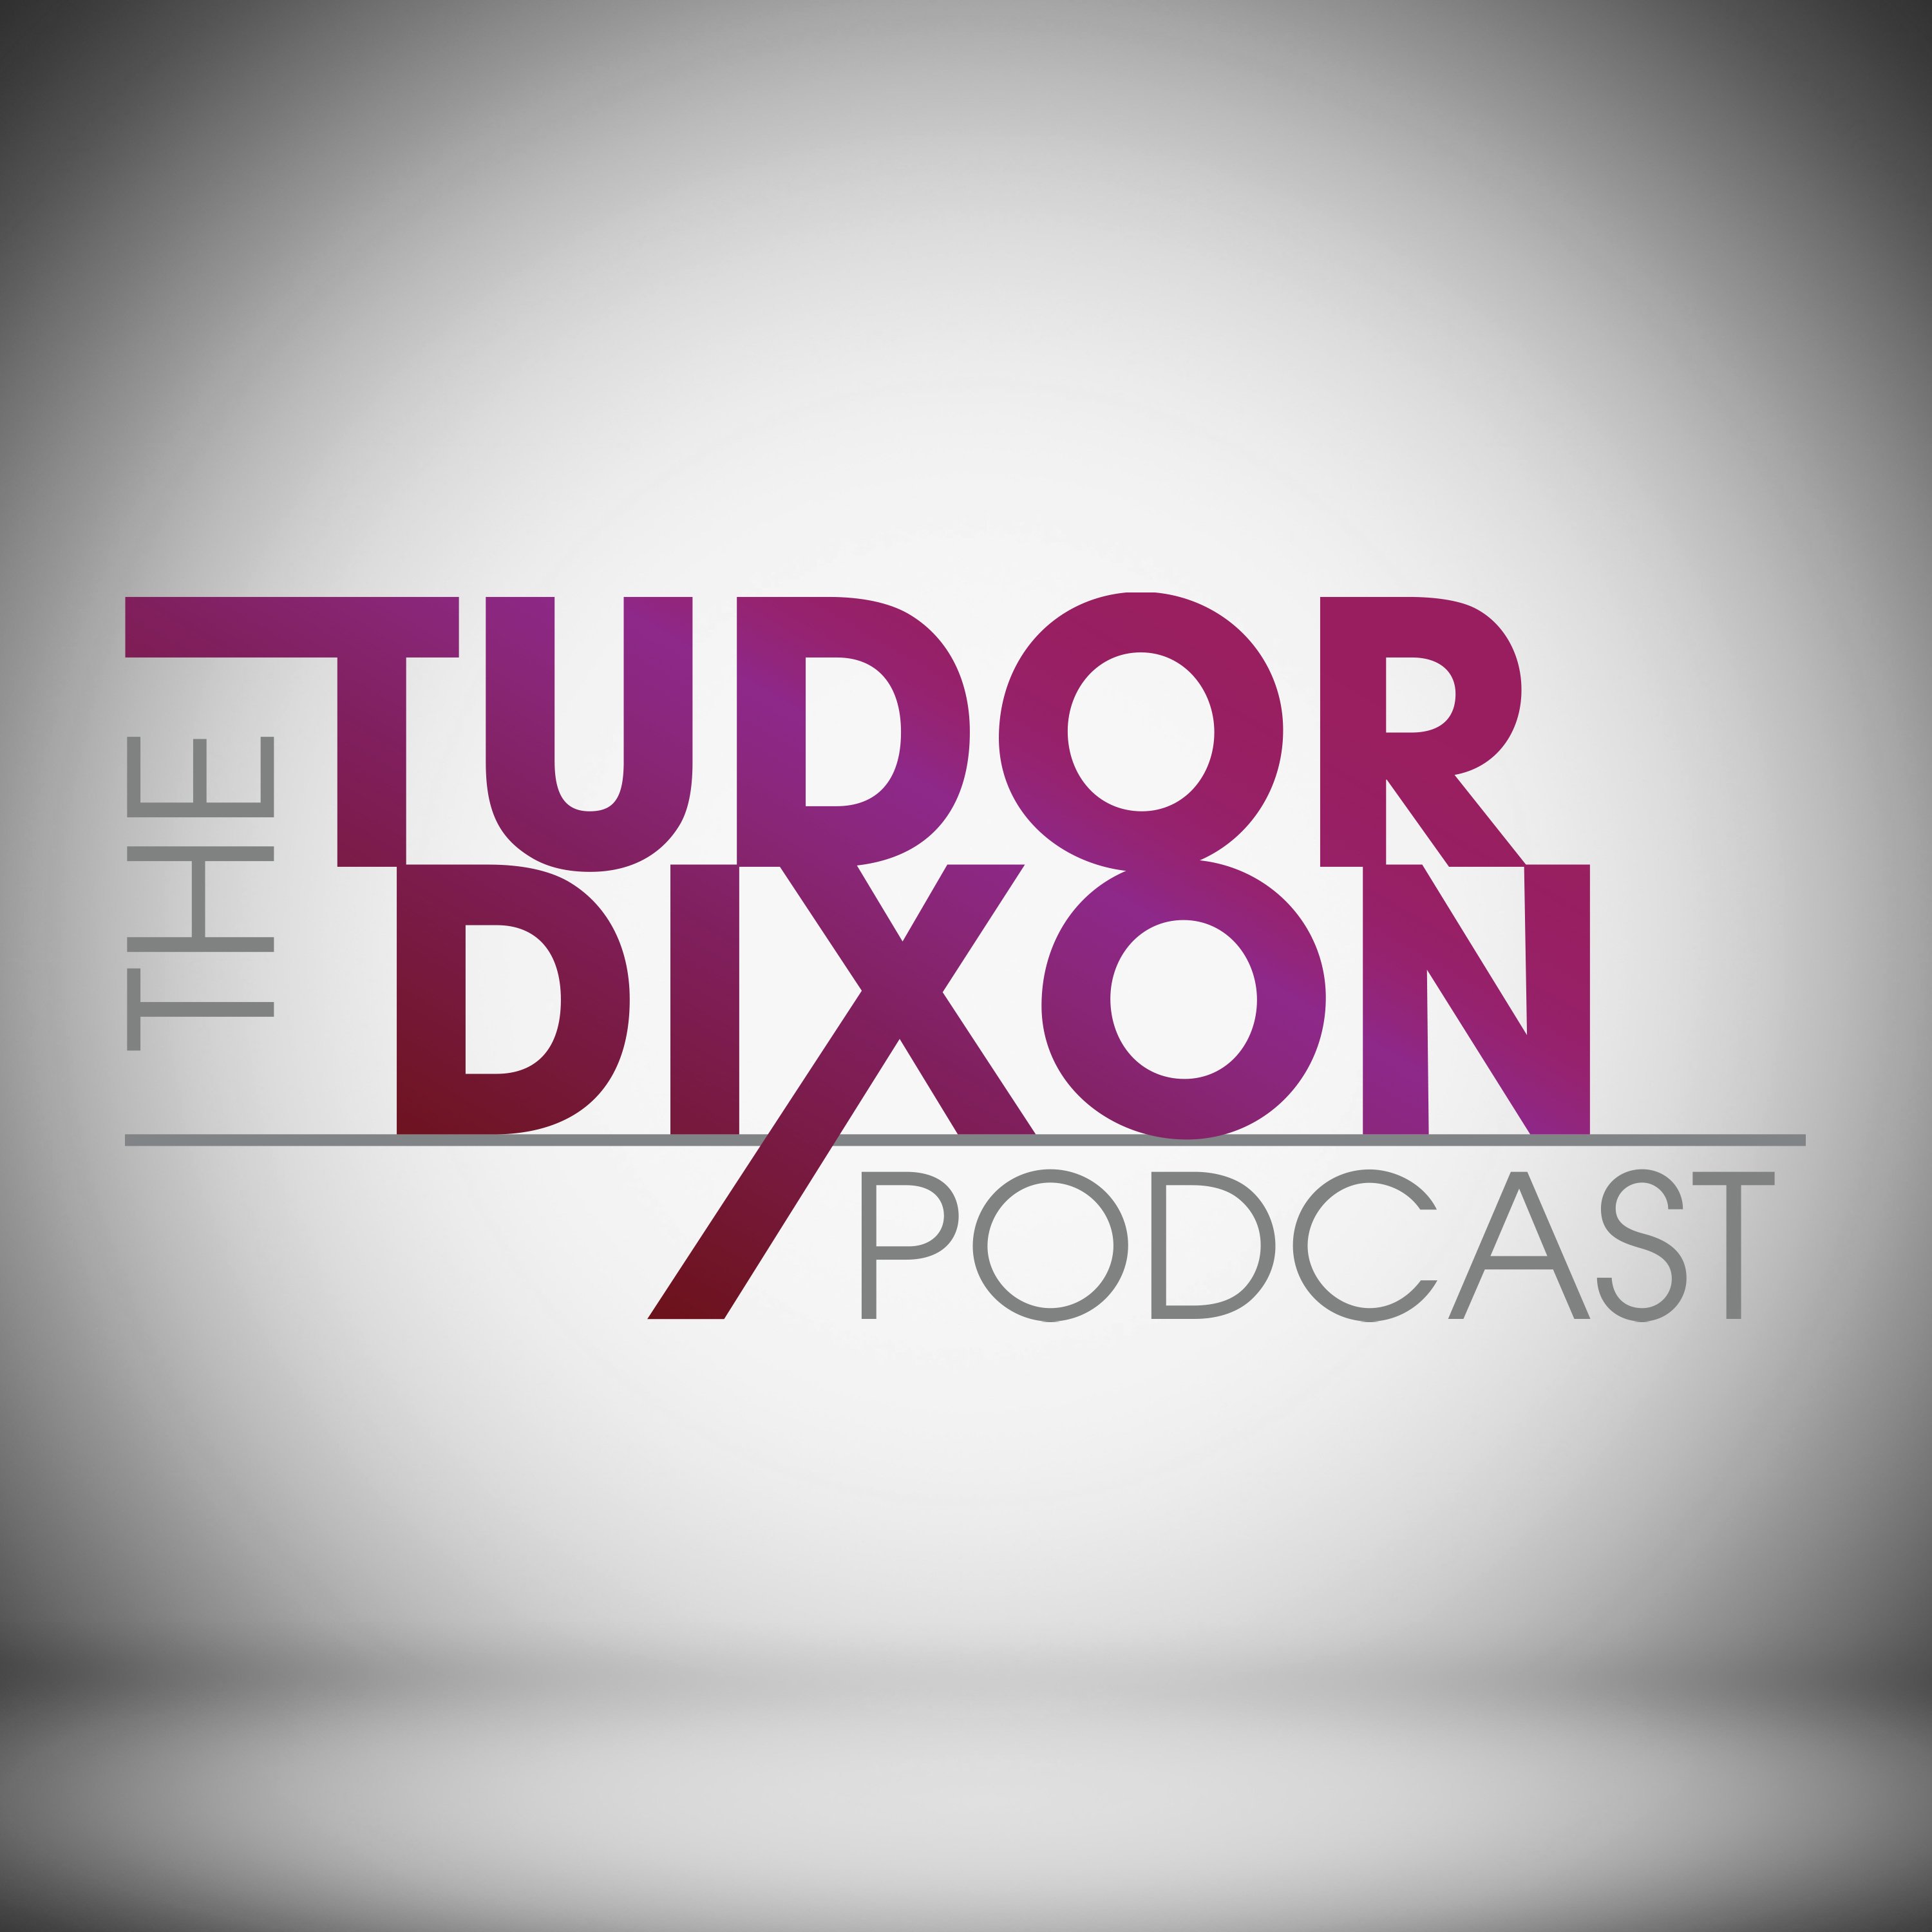 The Tudor Dixon Podcast: Is Disney's Wokeness Killing the Magic?